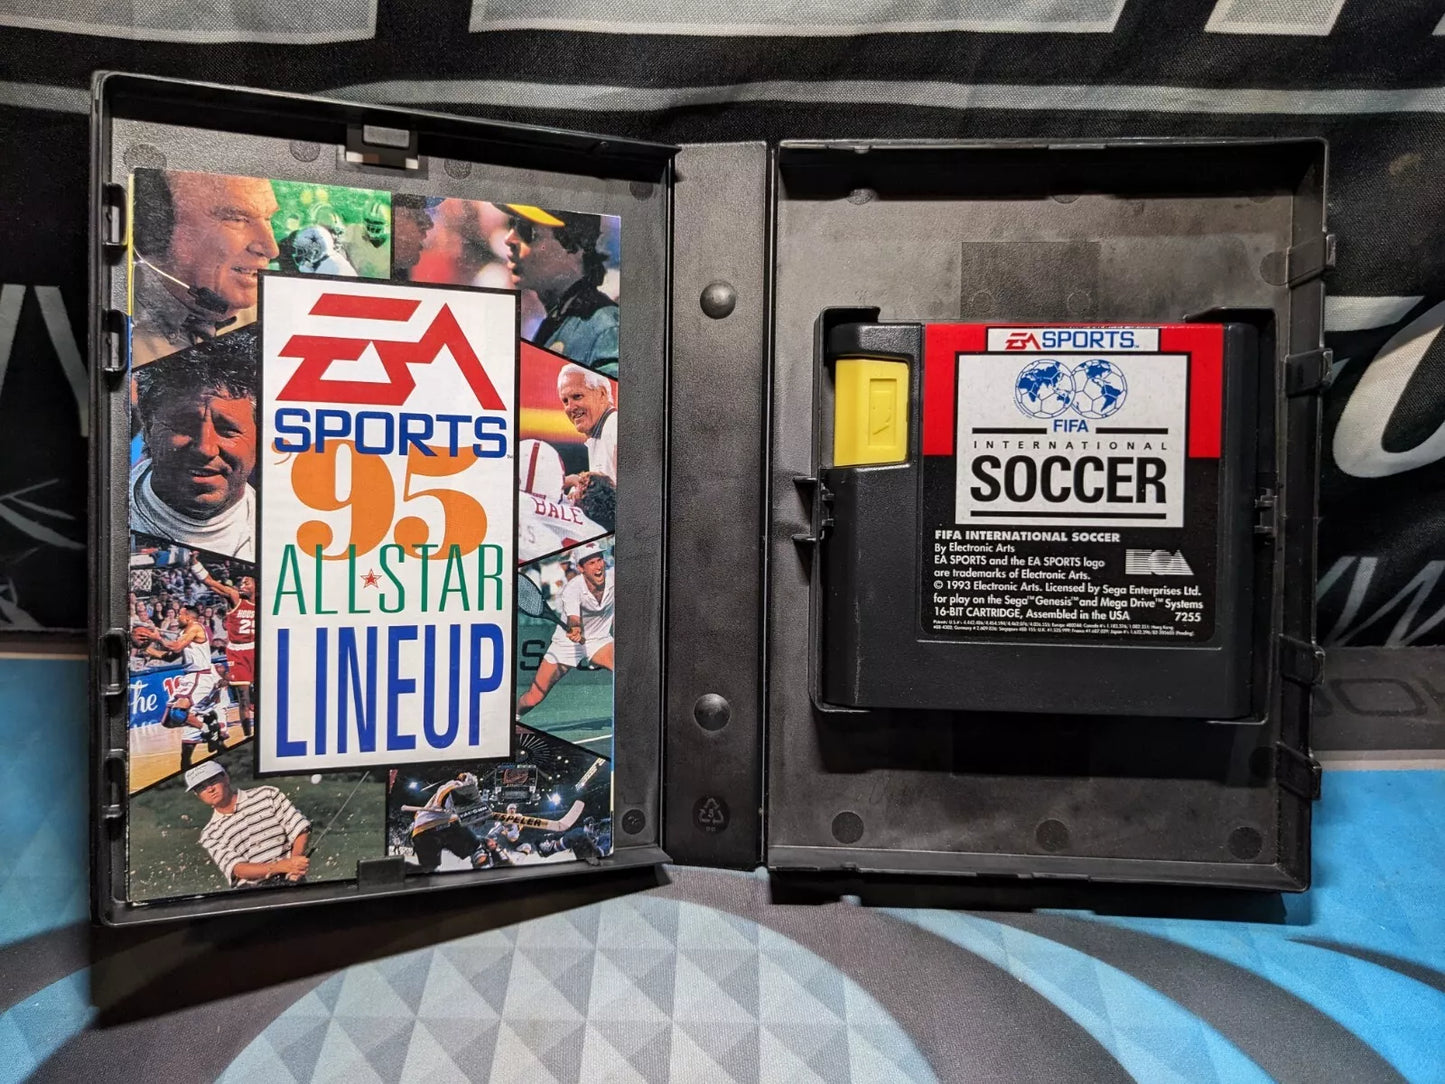 FIFA International Soccer (Sega Genesis, 1993)